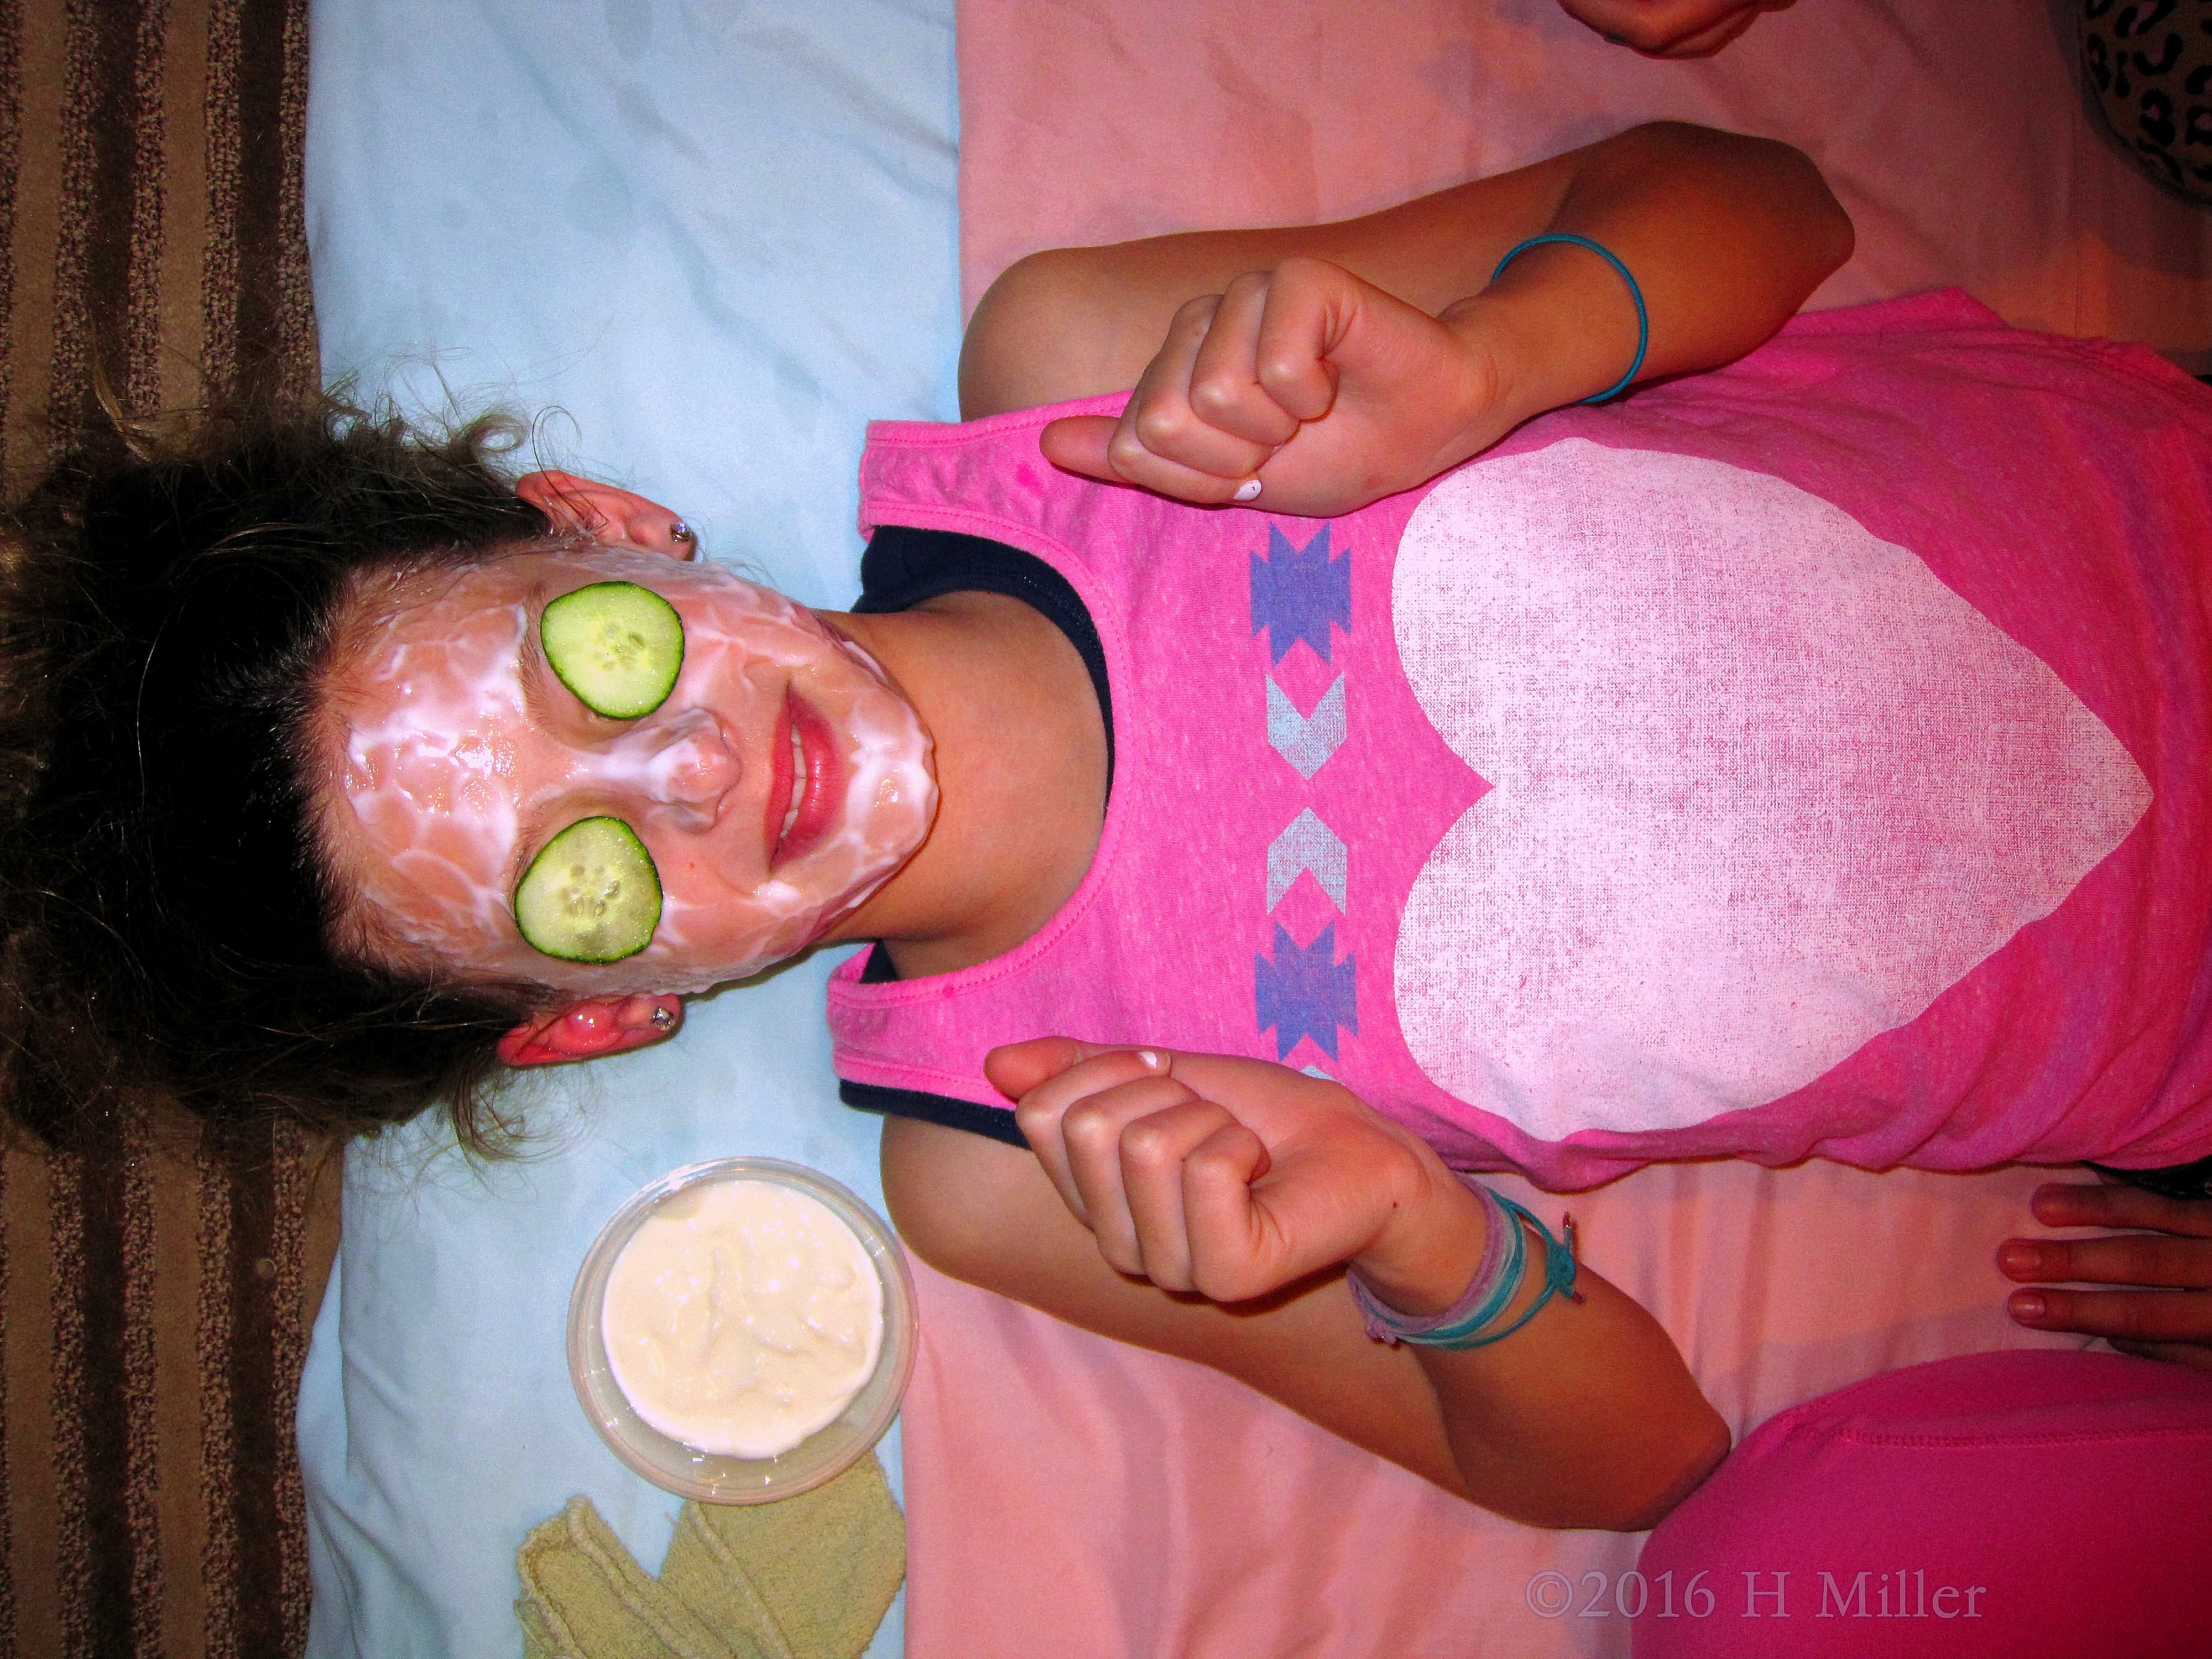 She's Happy About Her Vanilla Yogurt Facial